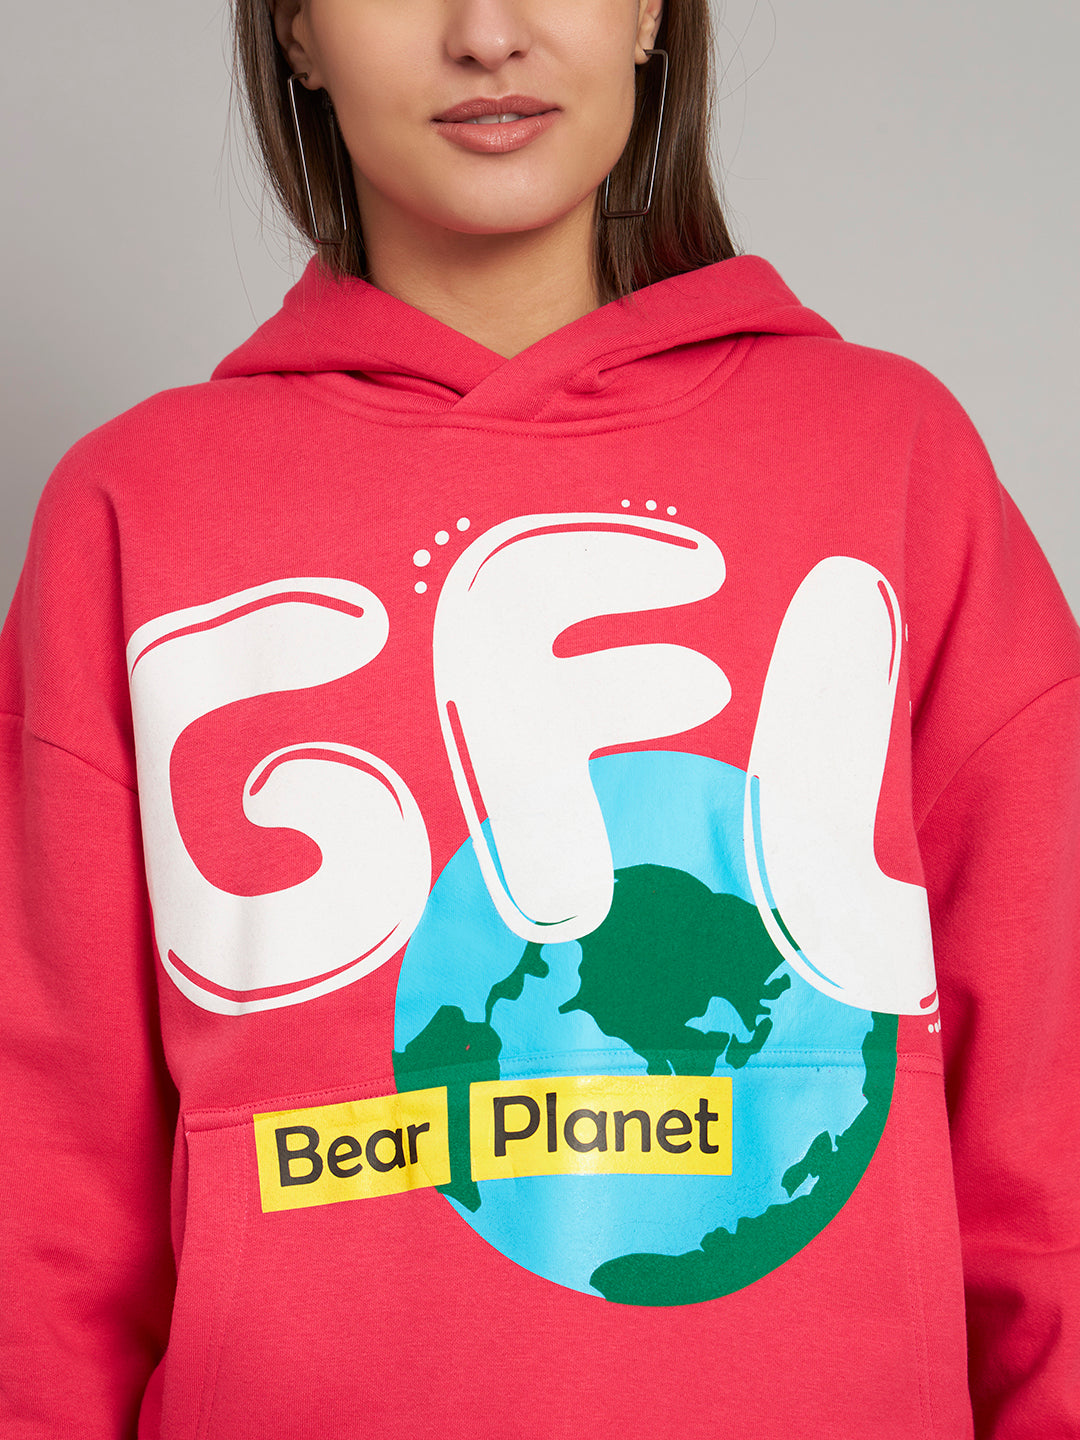 Griffel Women's Pink GFL Bear Planet print Oversized Fleece Hoodie Sweatshirt